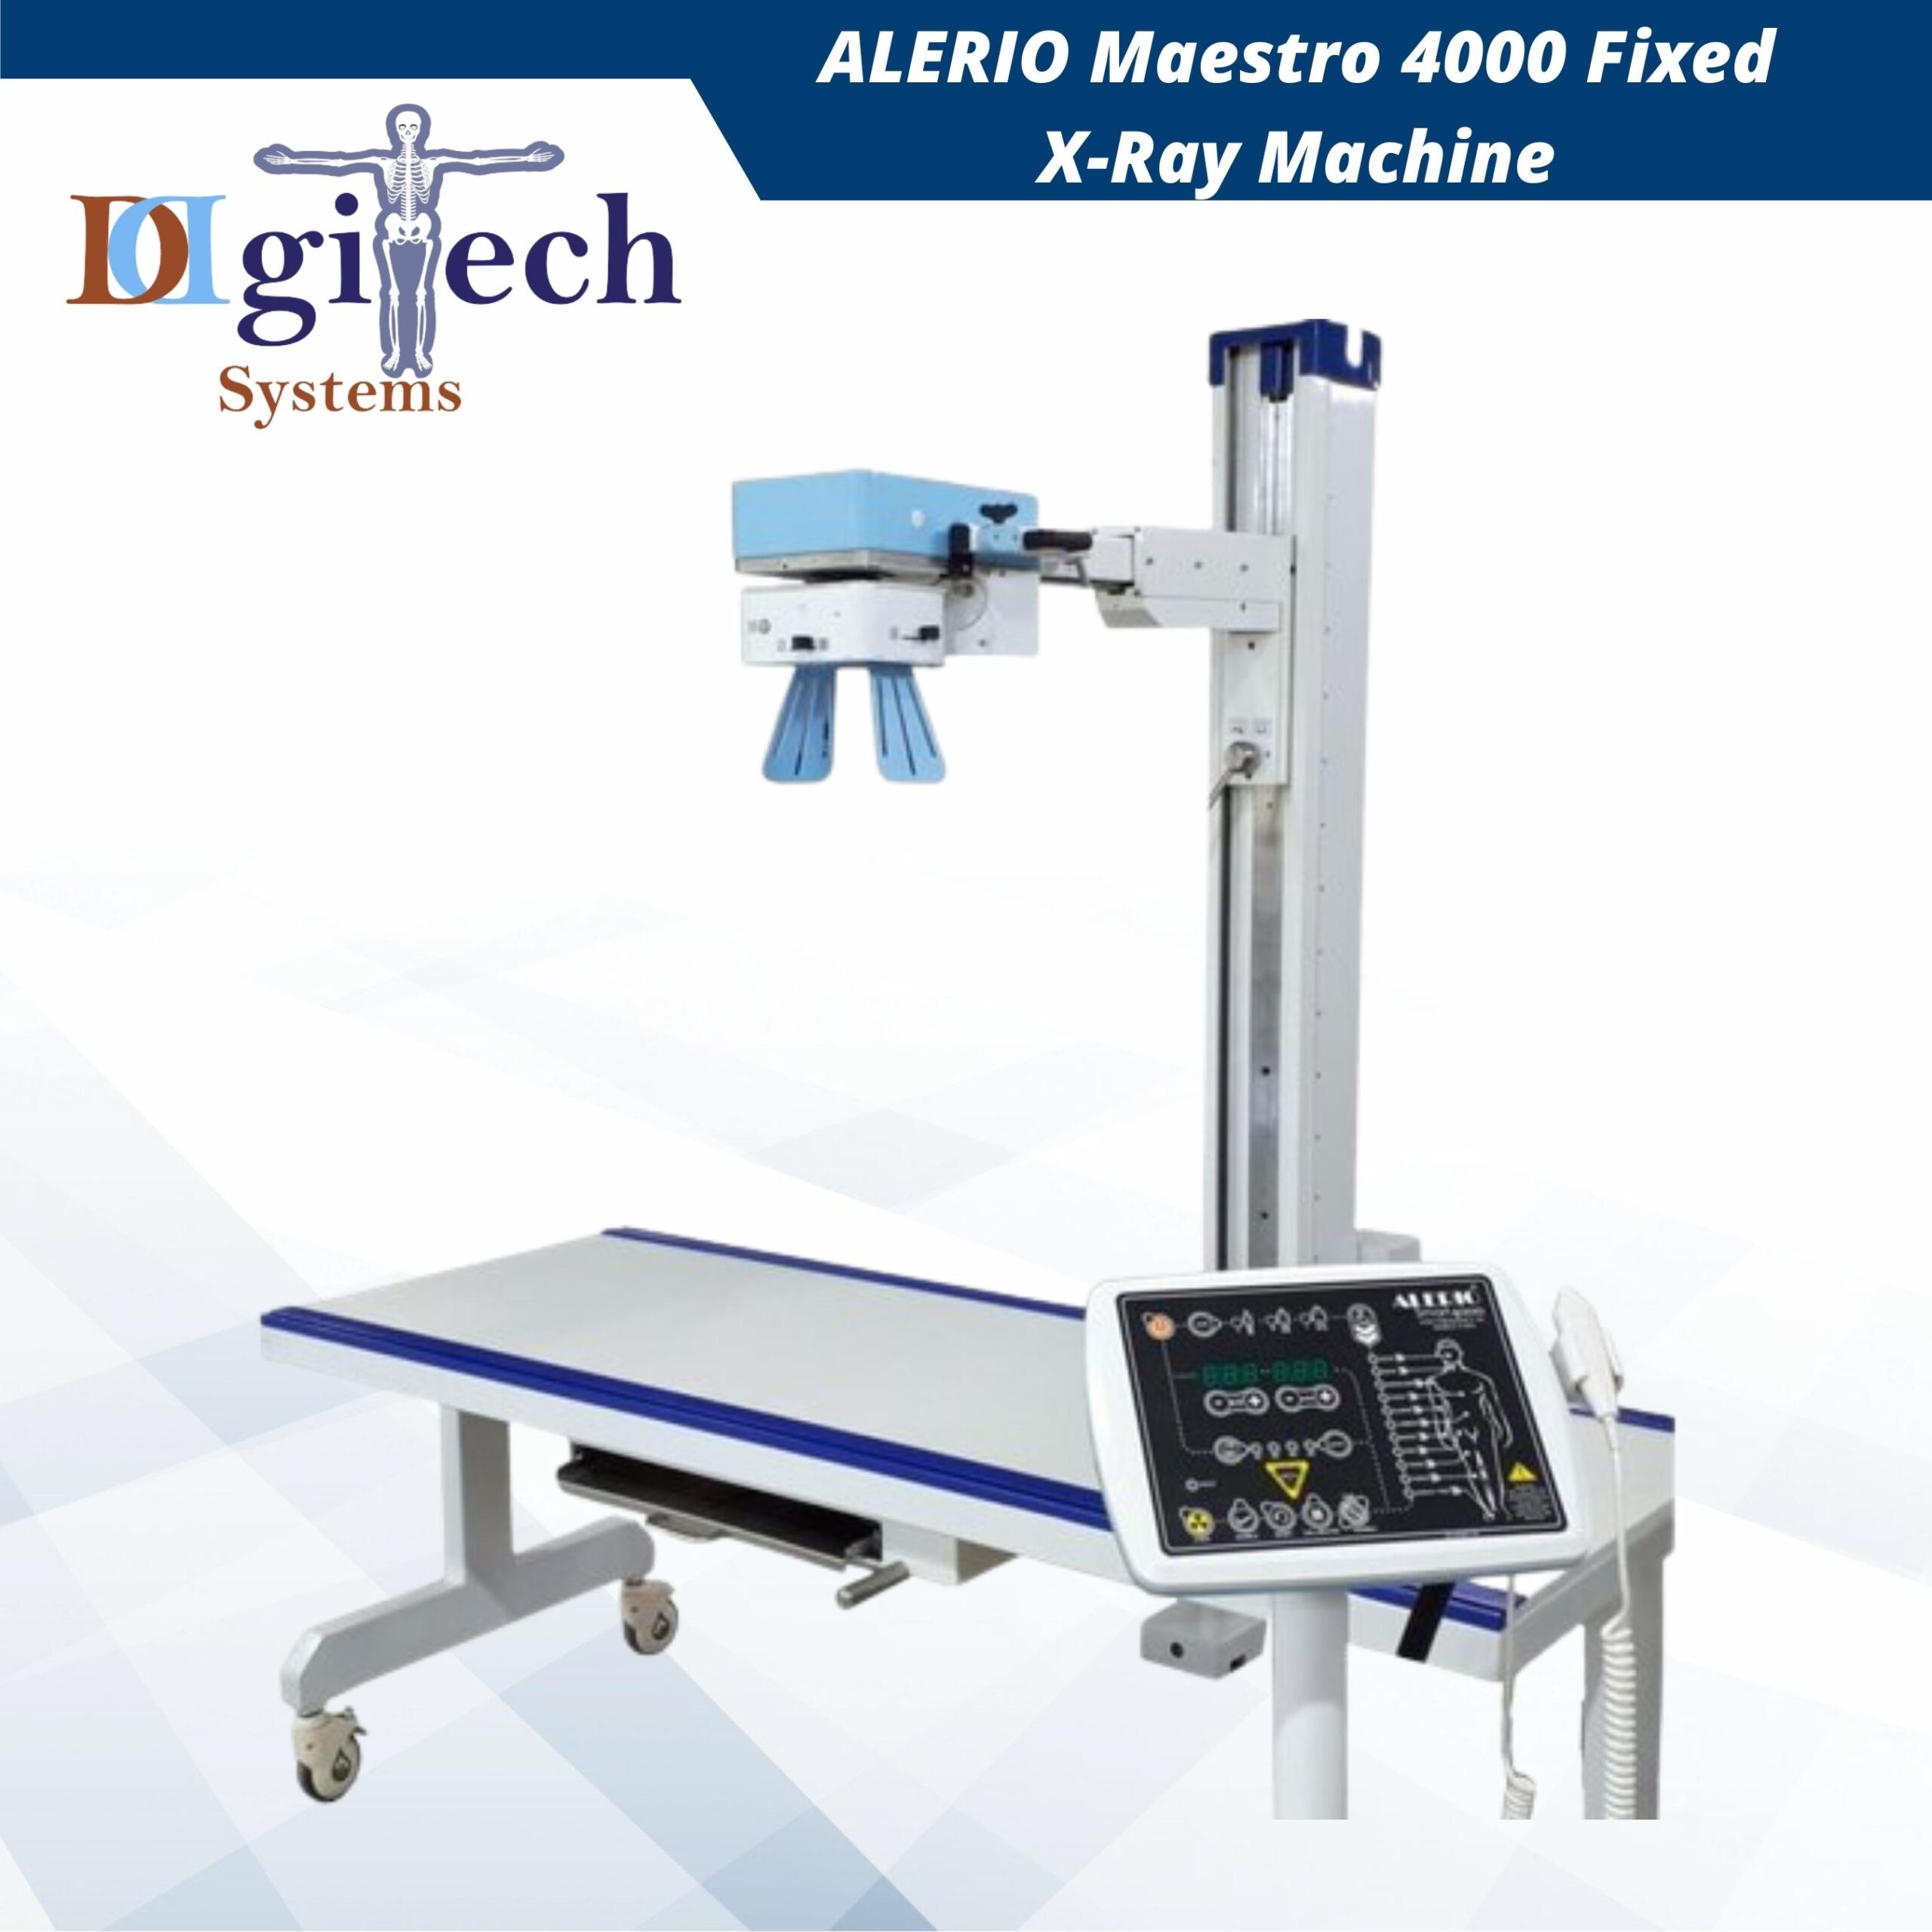 ALERIO Maestro 4000 Fixed X-Ray Machine